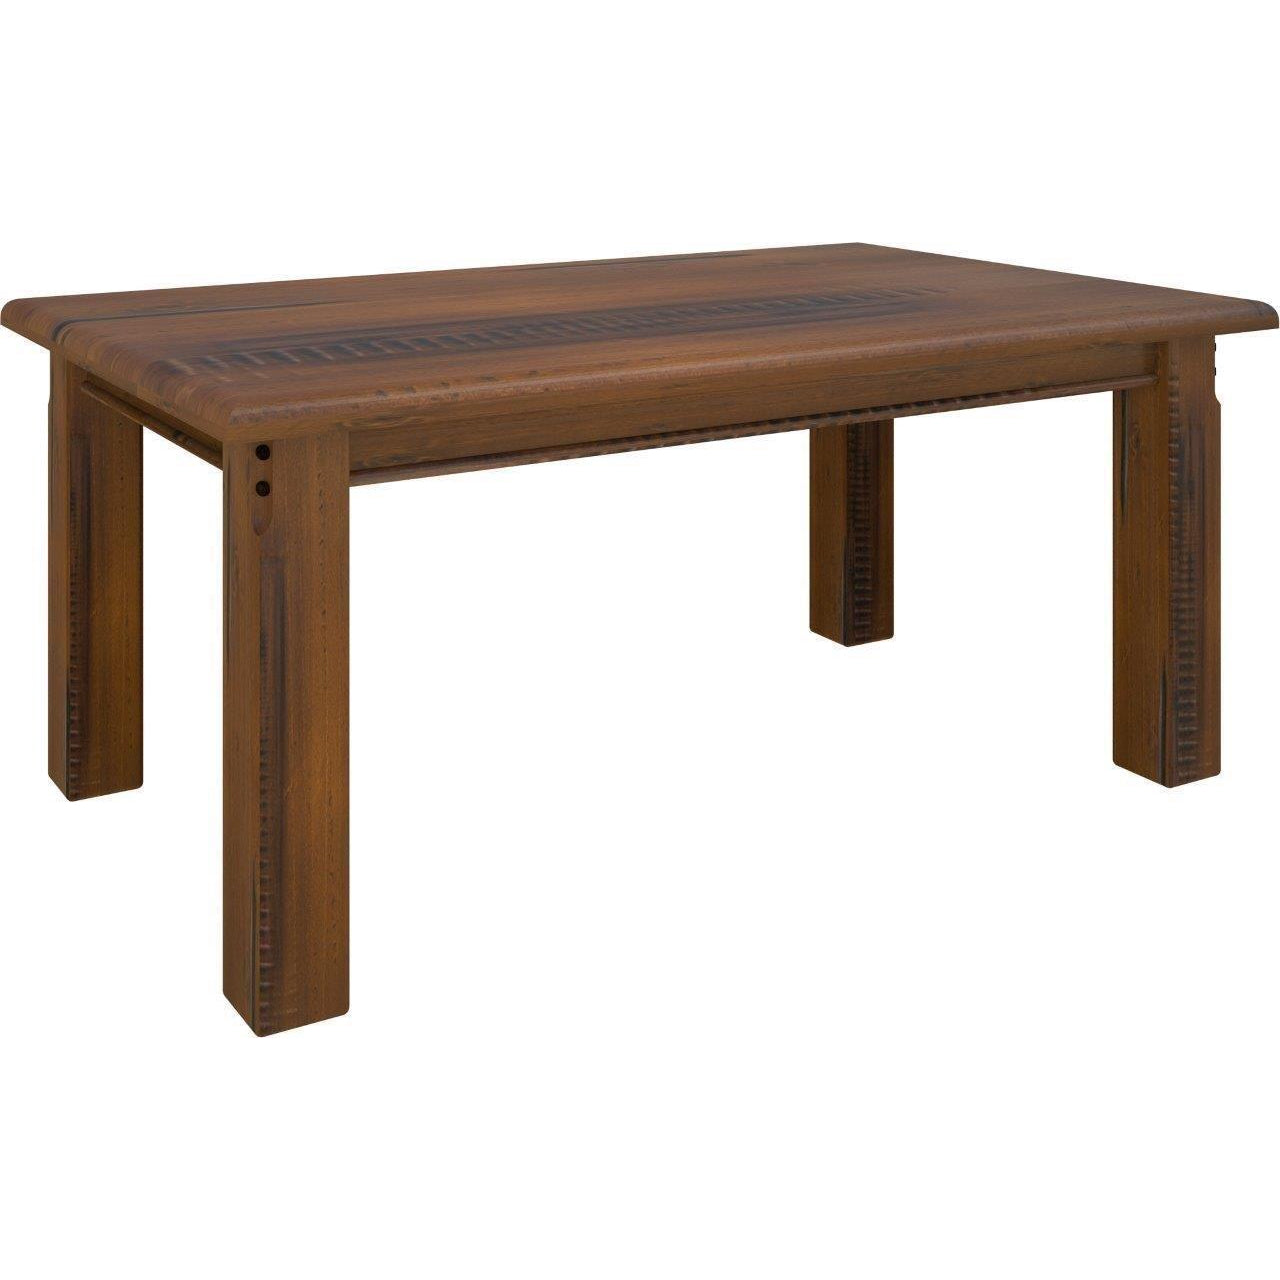 Umber Dining Table 180cm Solid Pine Wood Home Dinner Furniture - Dark Brown